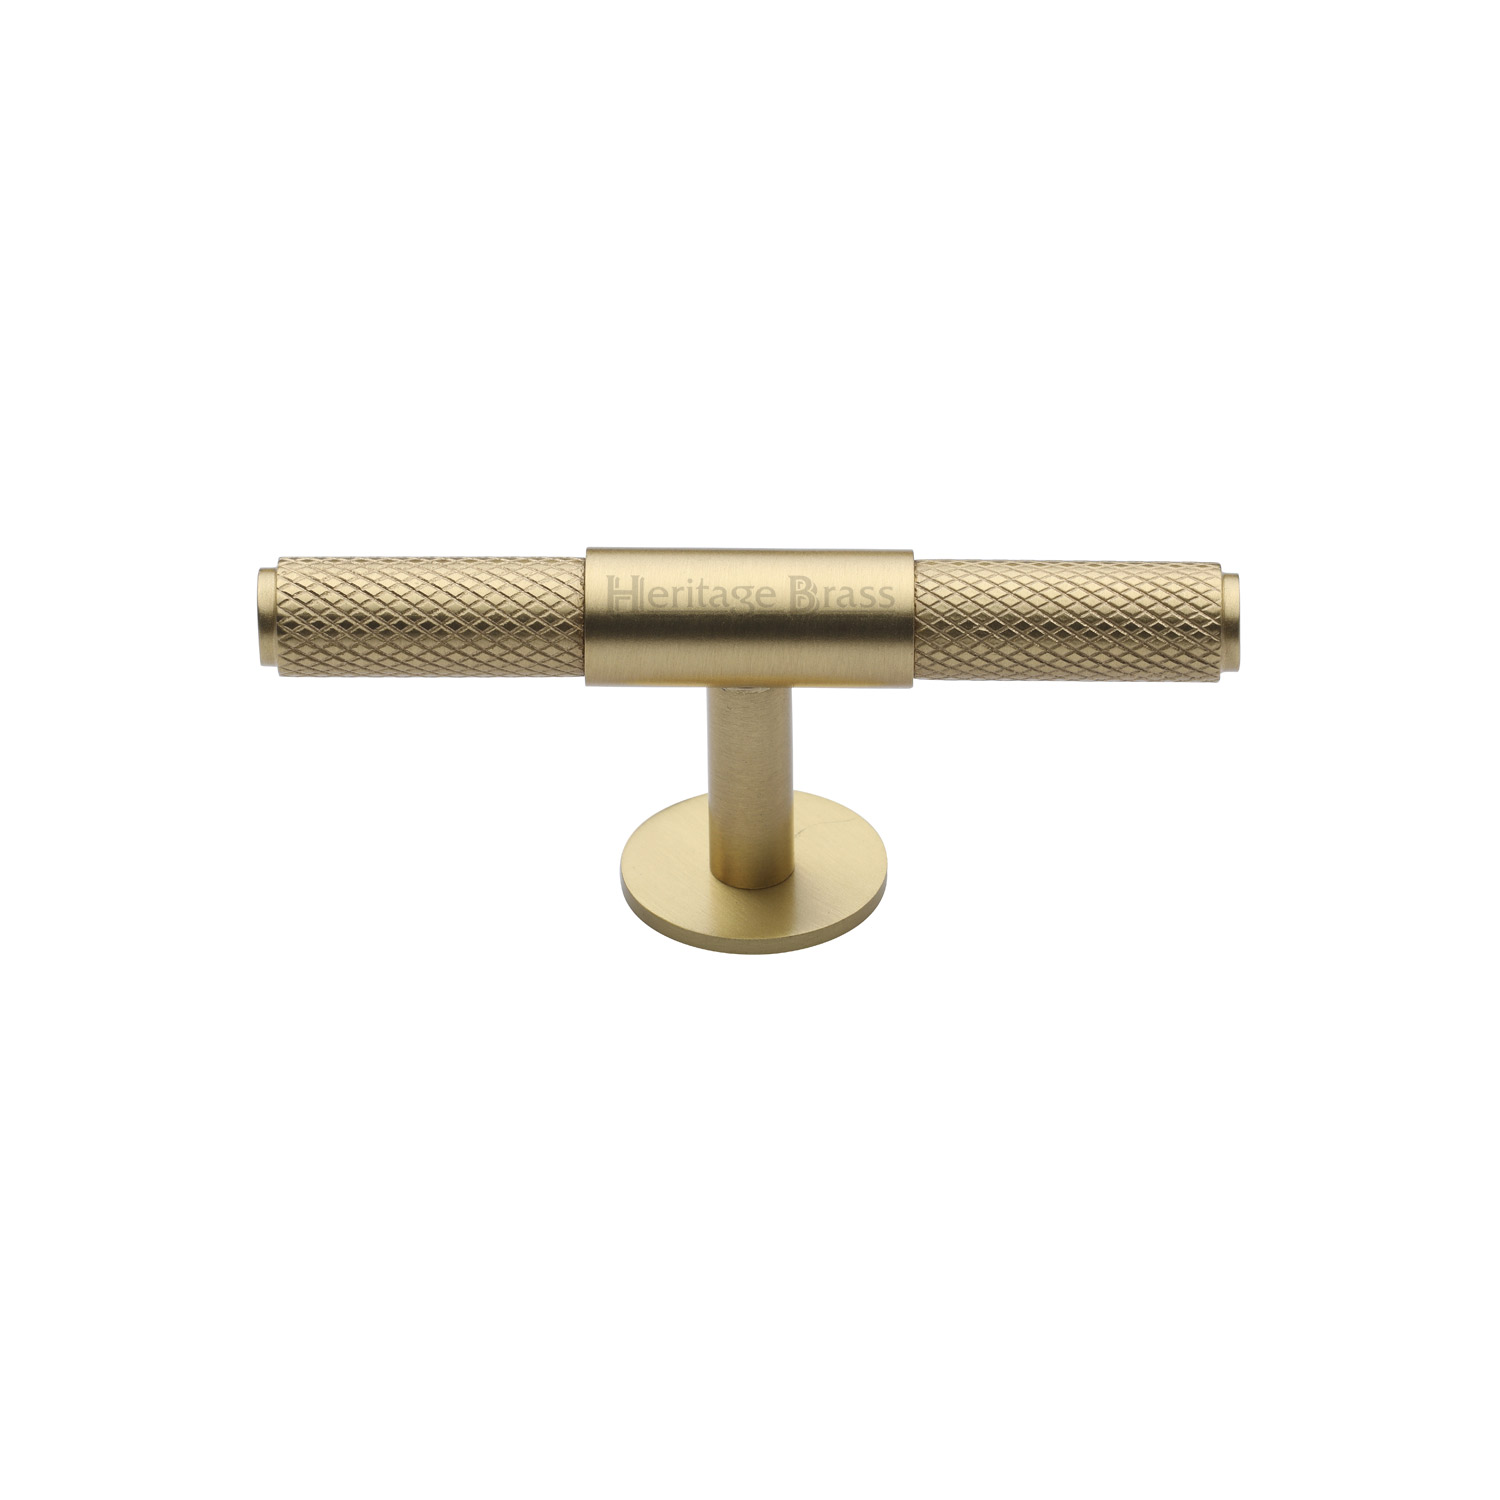 Heritage Brass Cabinet Knob Knurled Fountain Design 90mm